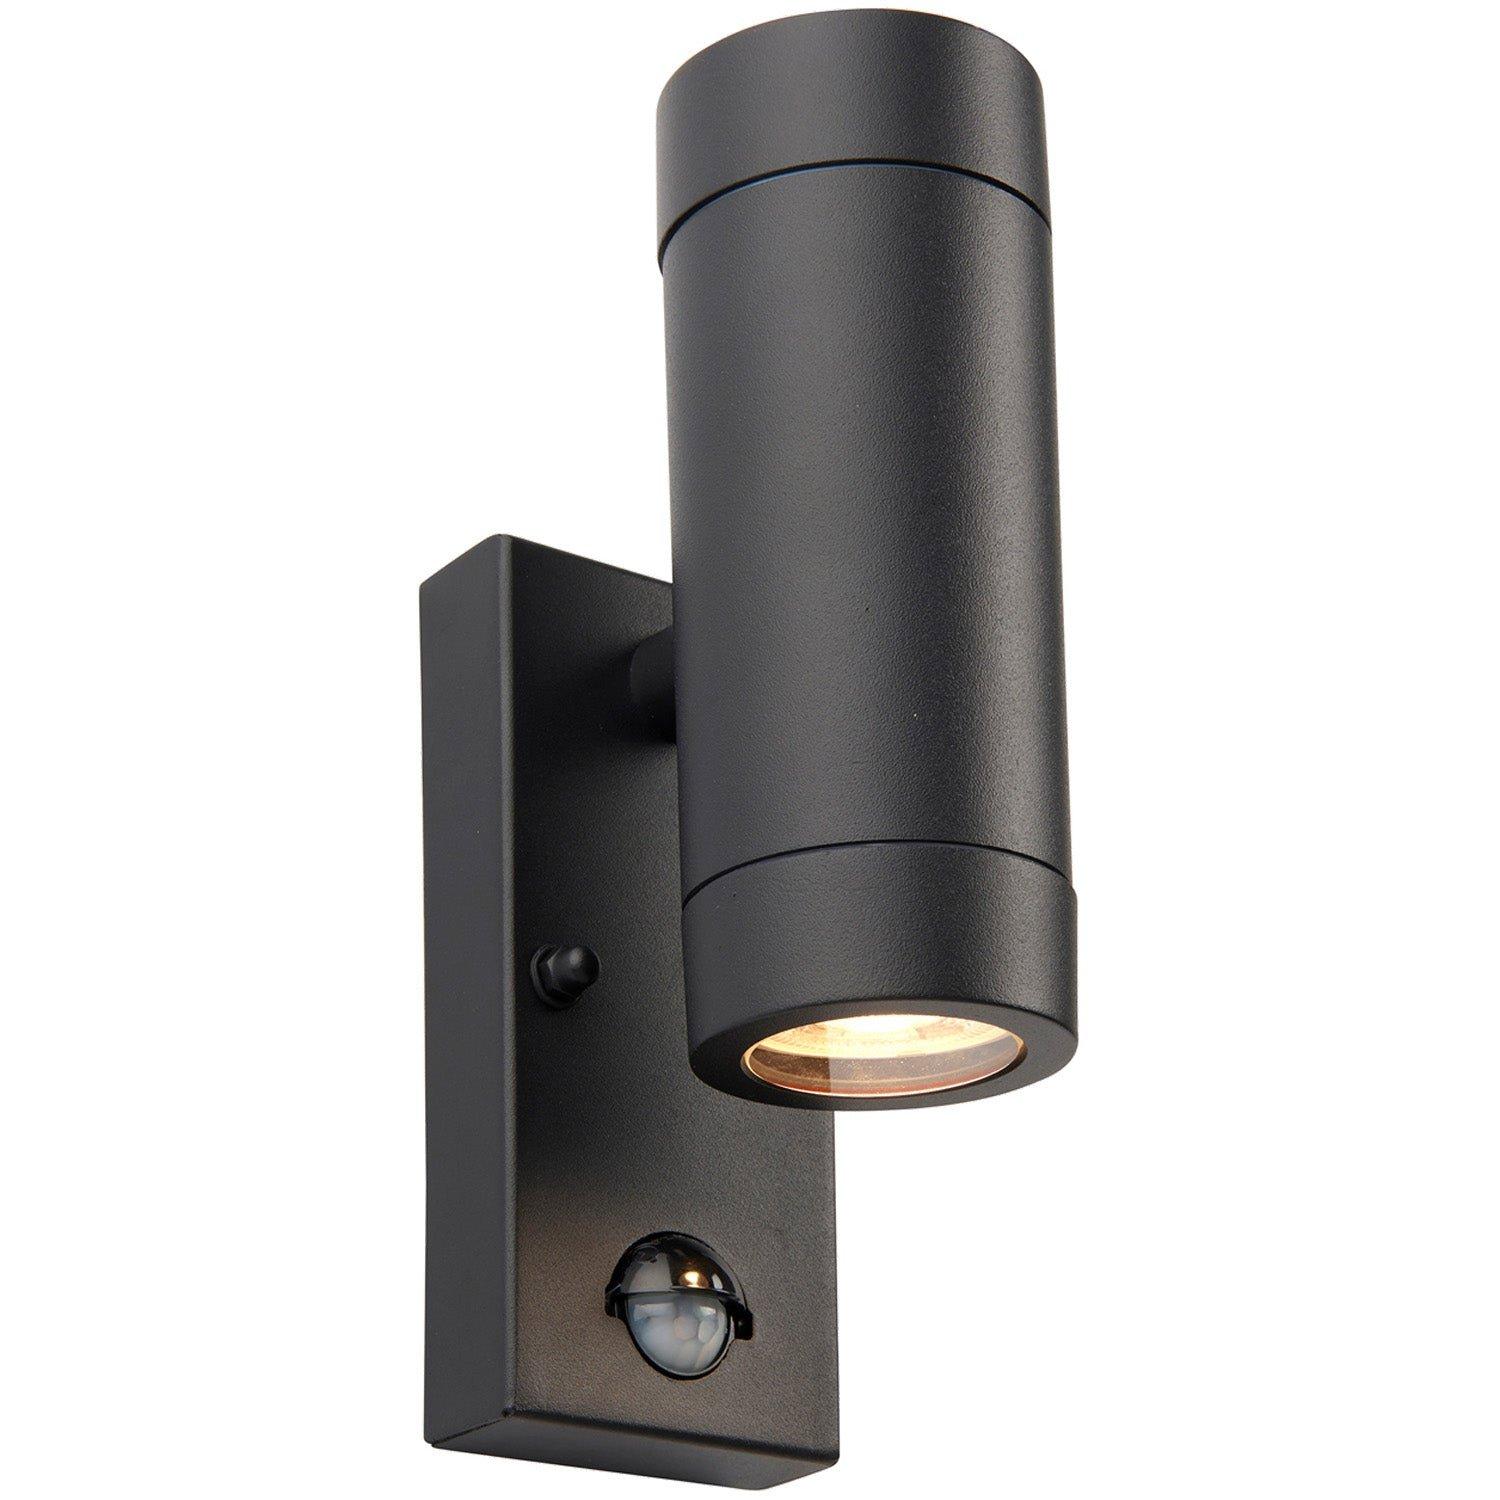 Twin Up & Down Wall Light with PIR Sensor - 2 x 7W GU10 LED - Satin Black